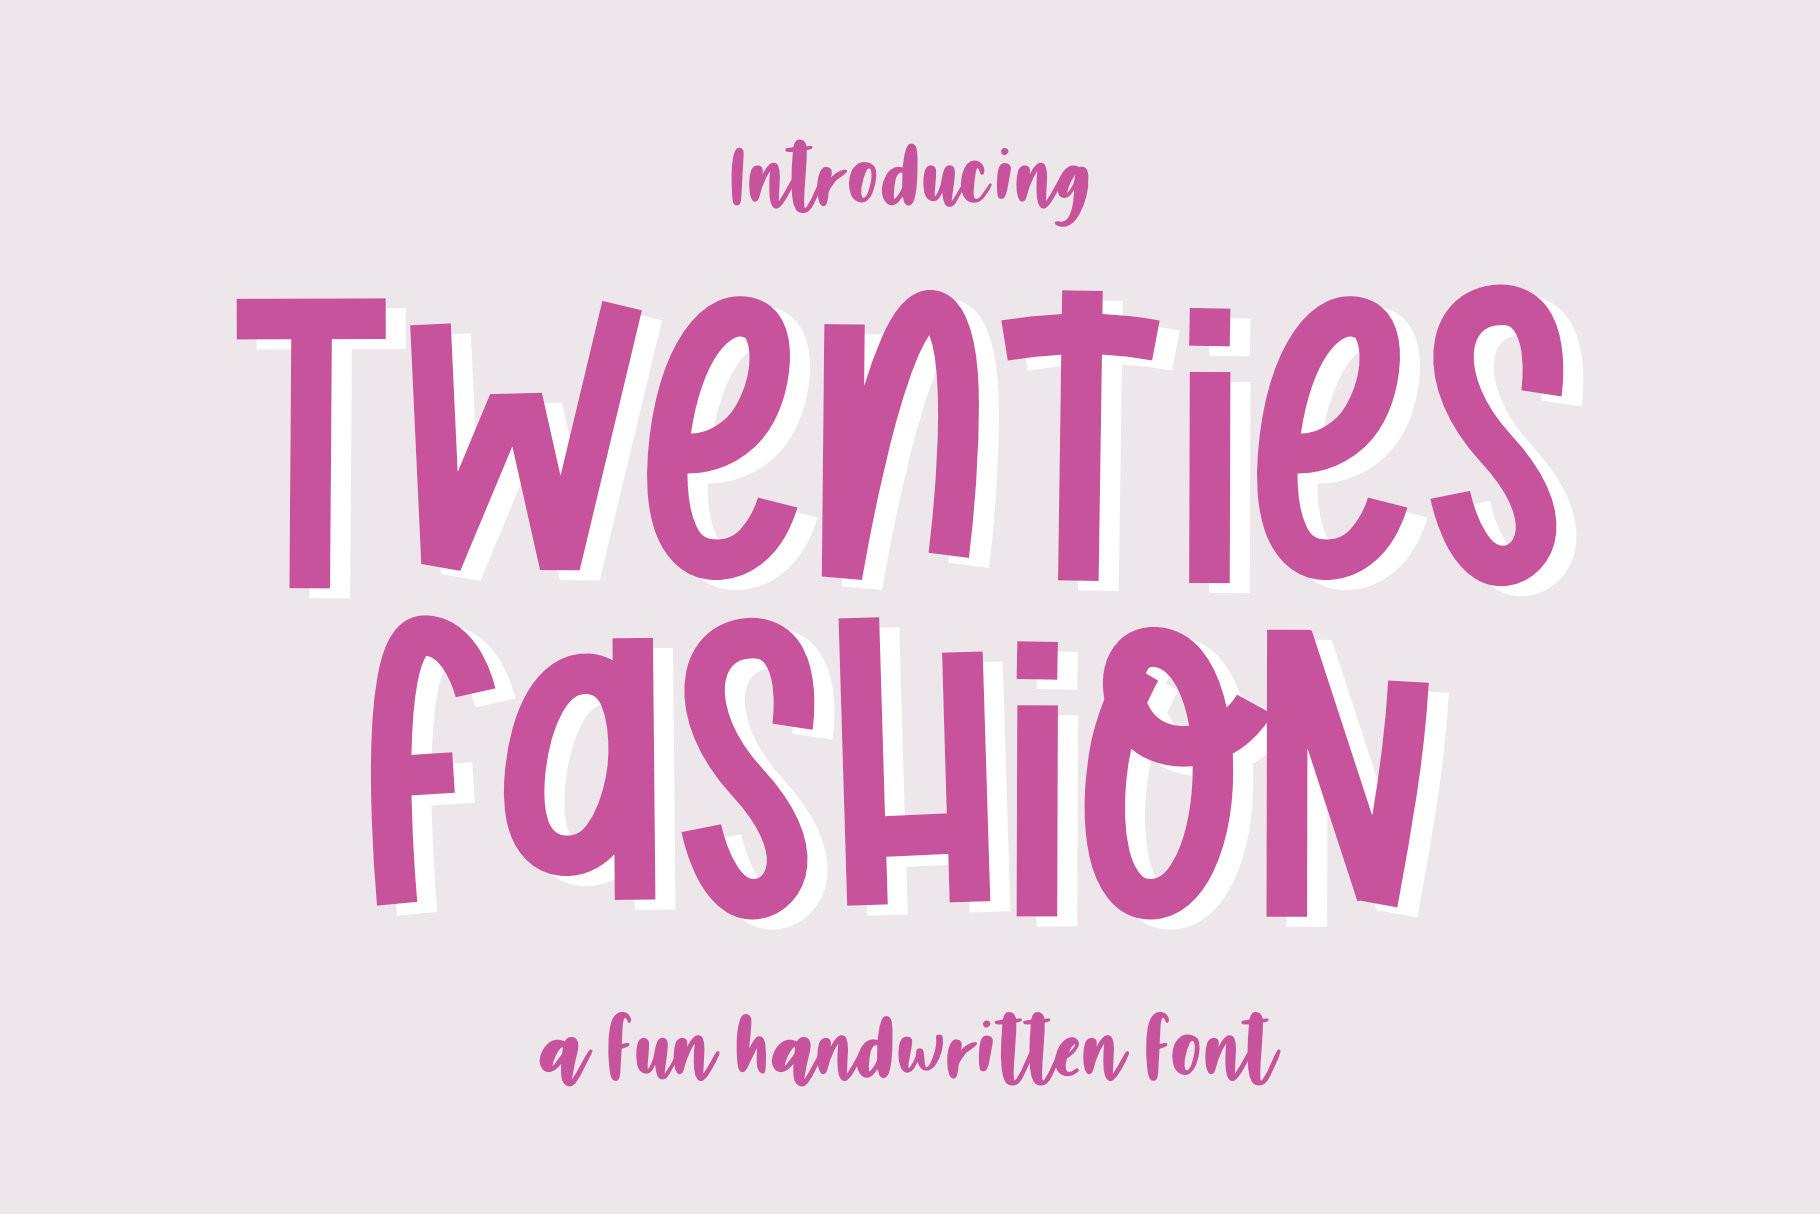 Twenties Fashion Font